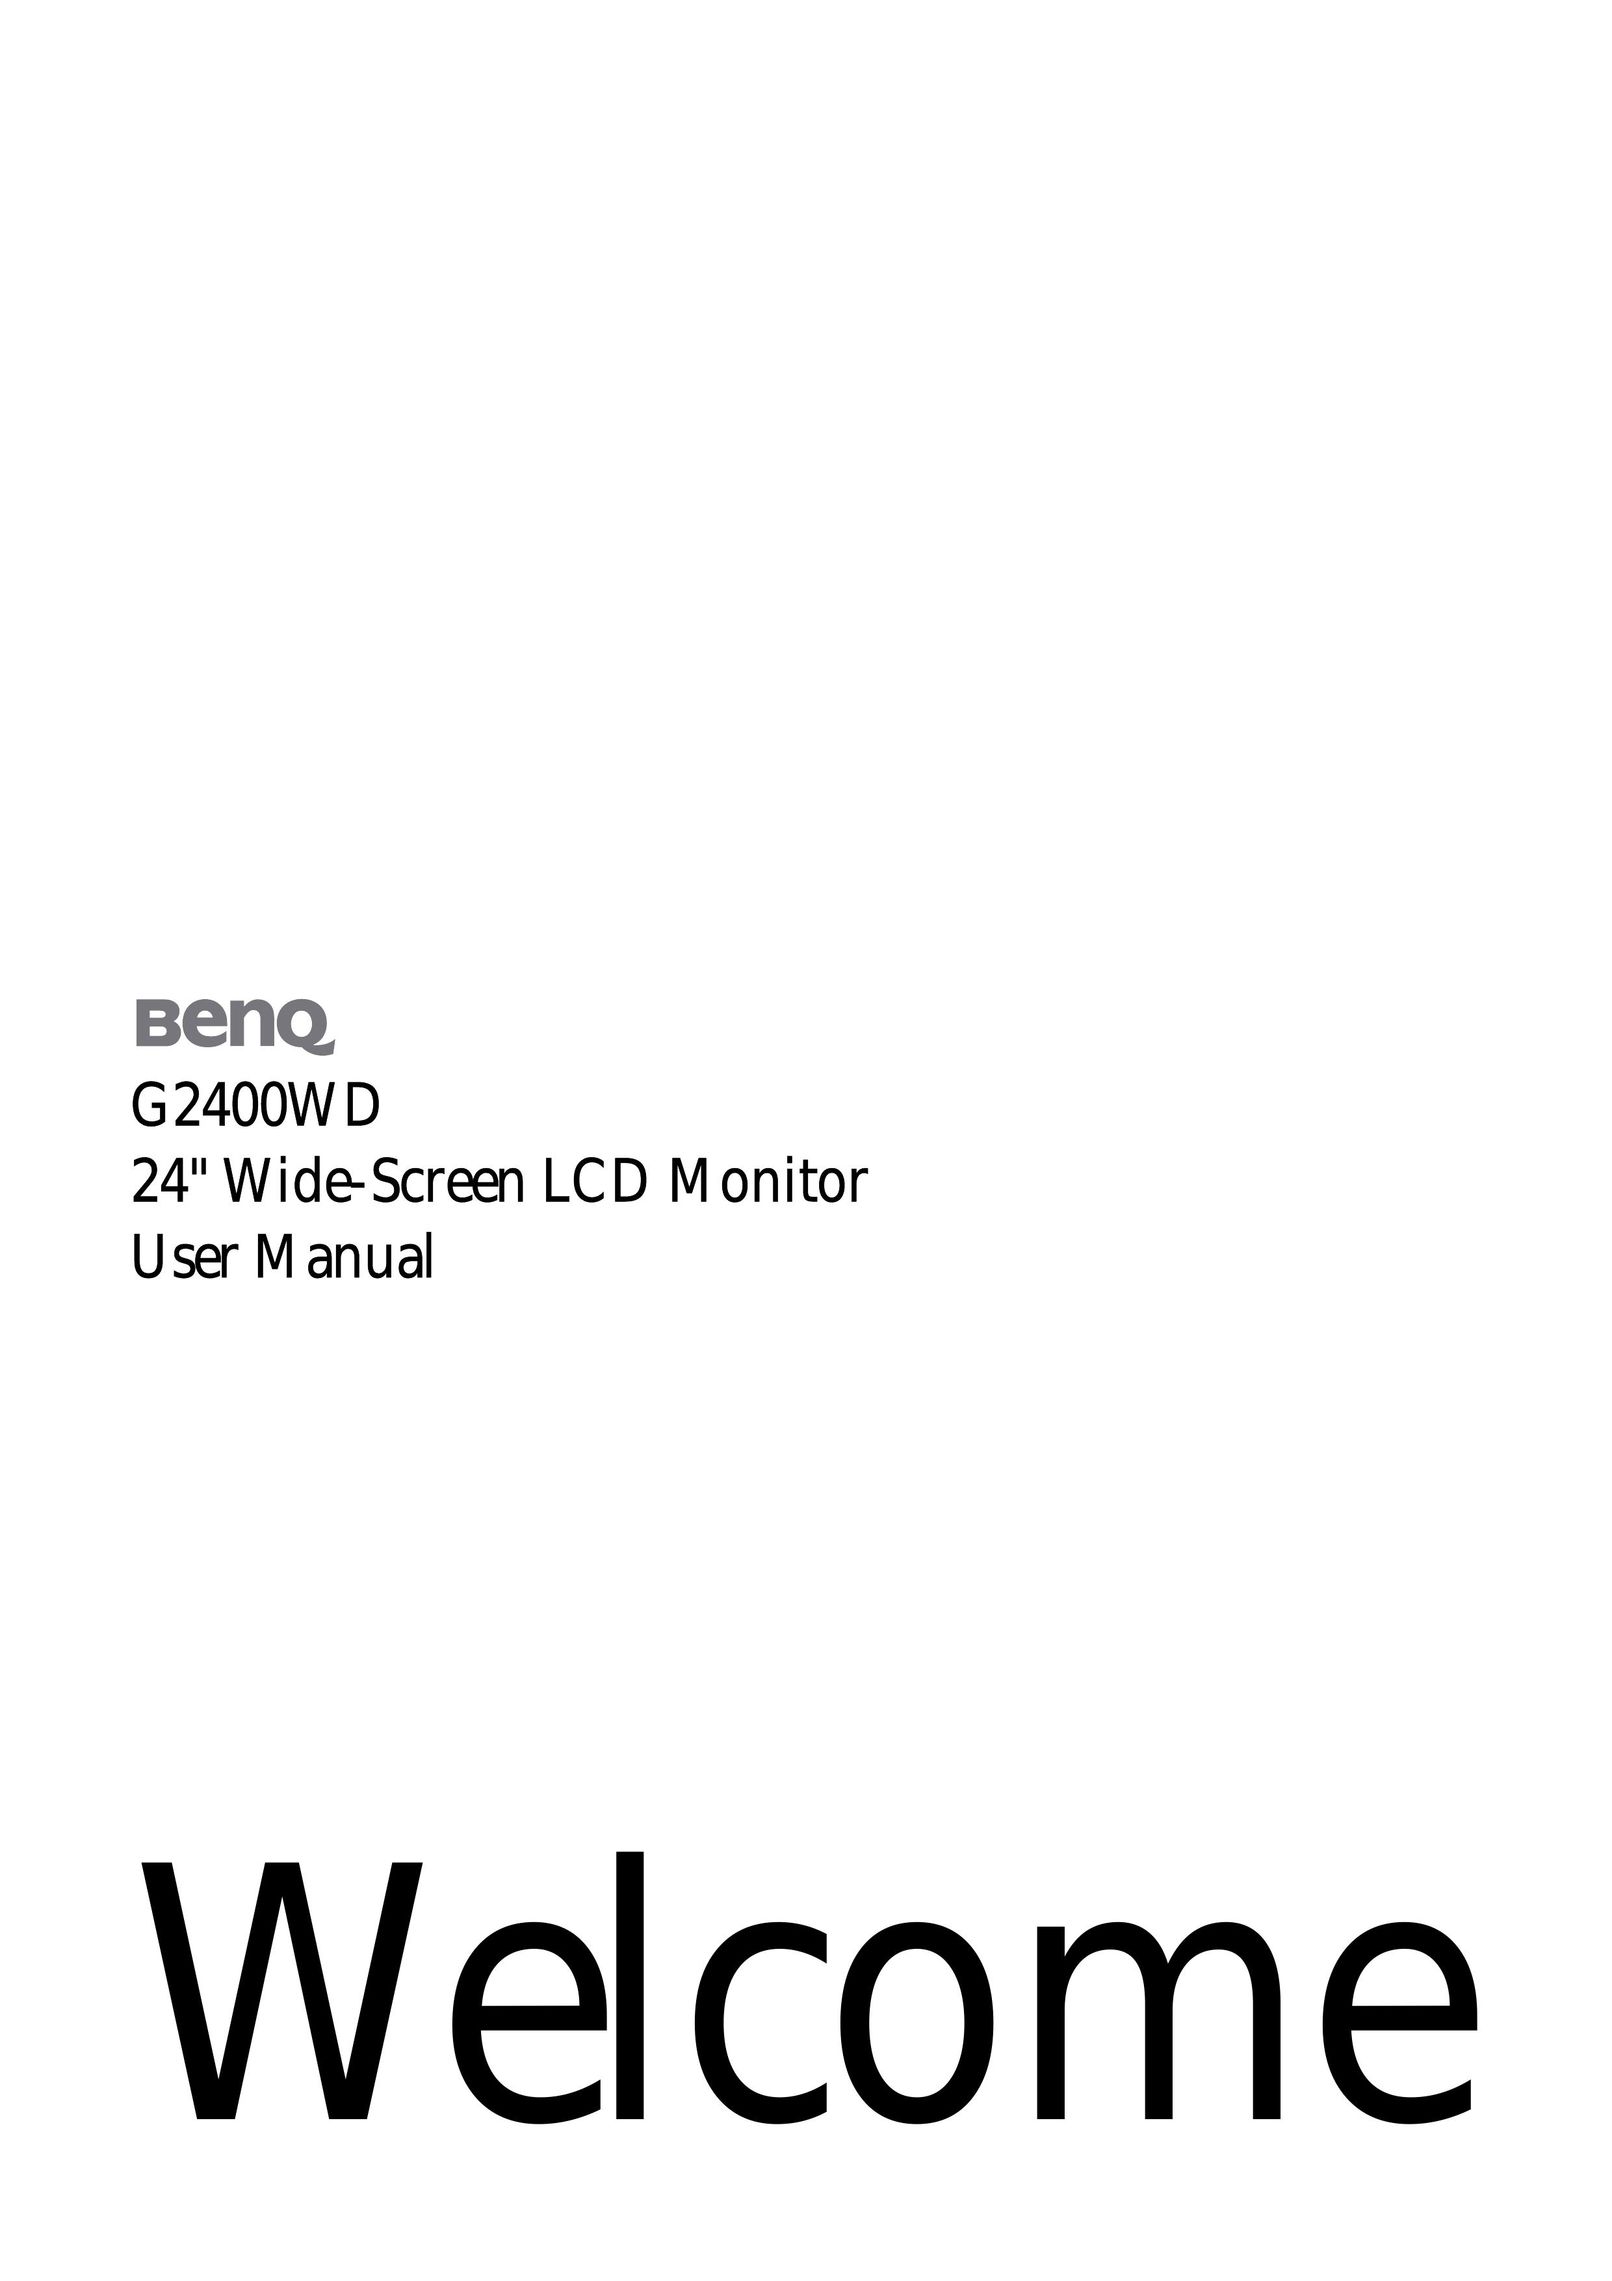 BenQ G2400WD Computer Monitor User Manual